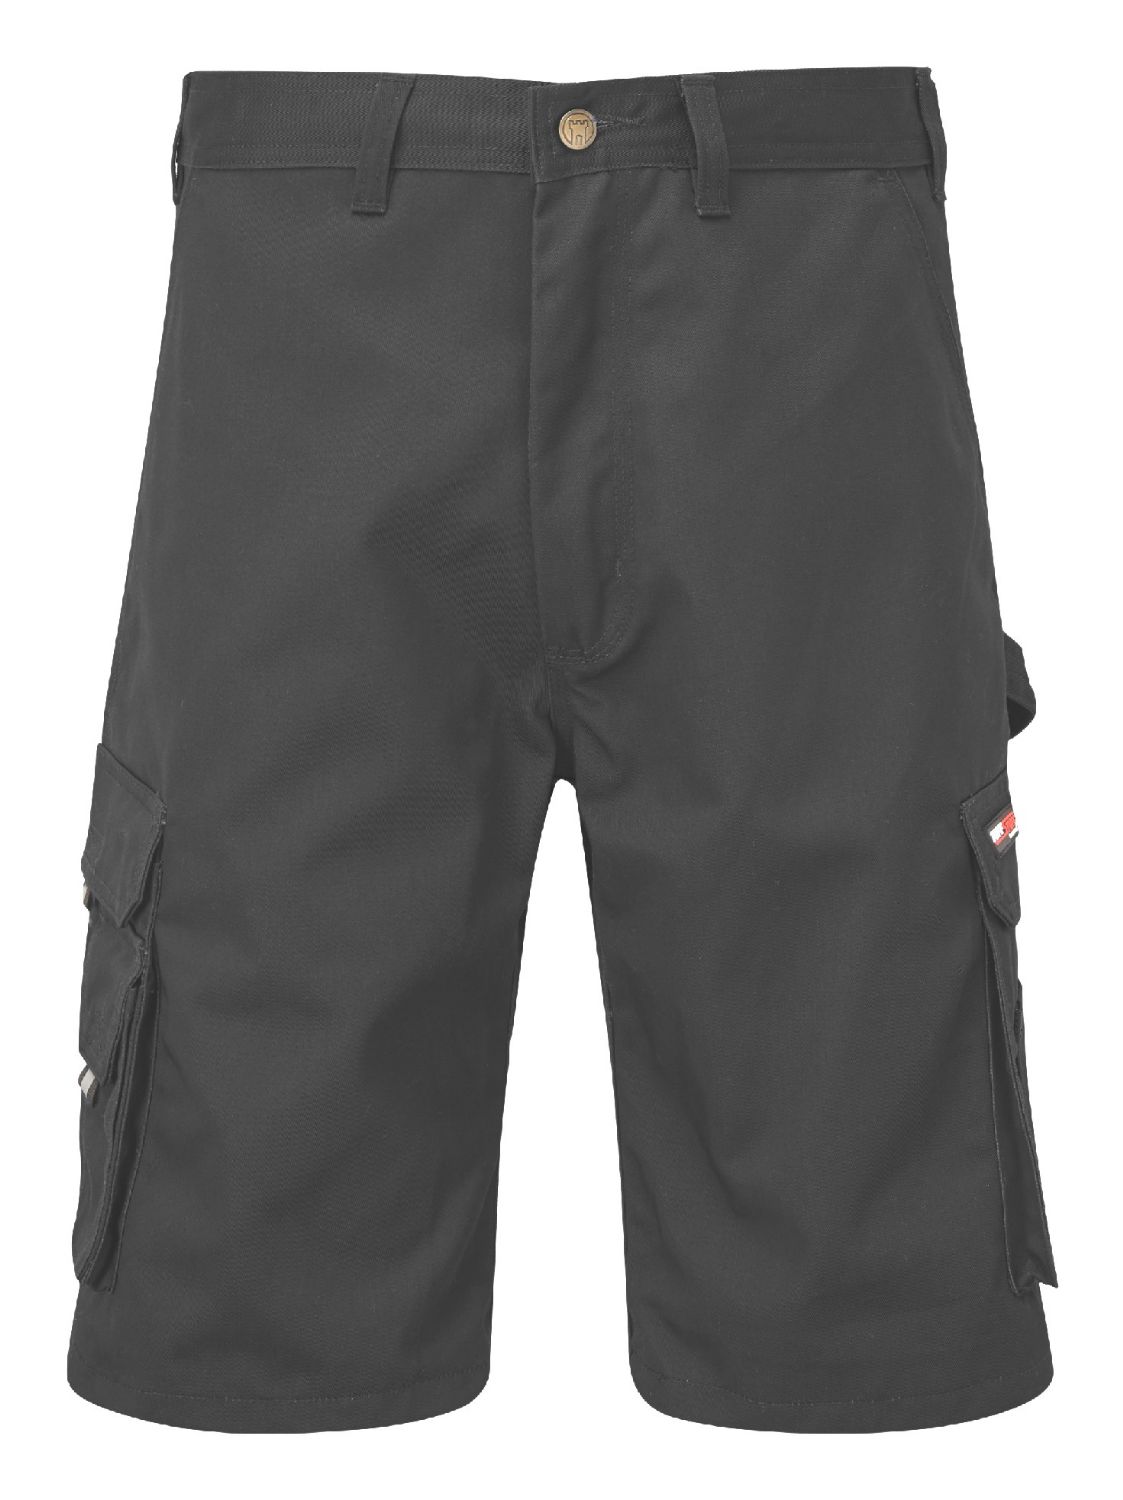 Tuffstuff Shorts 811 Black size 32